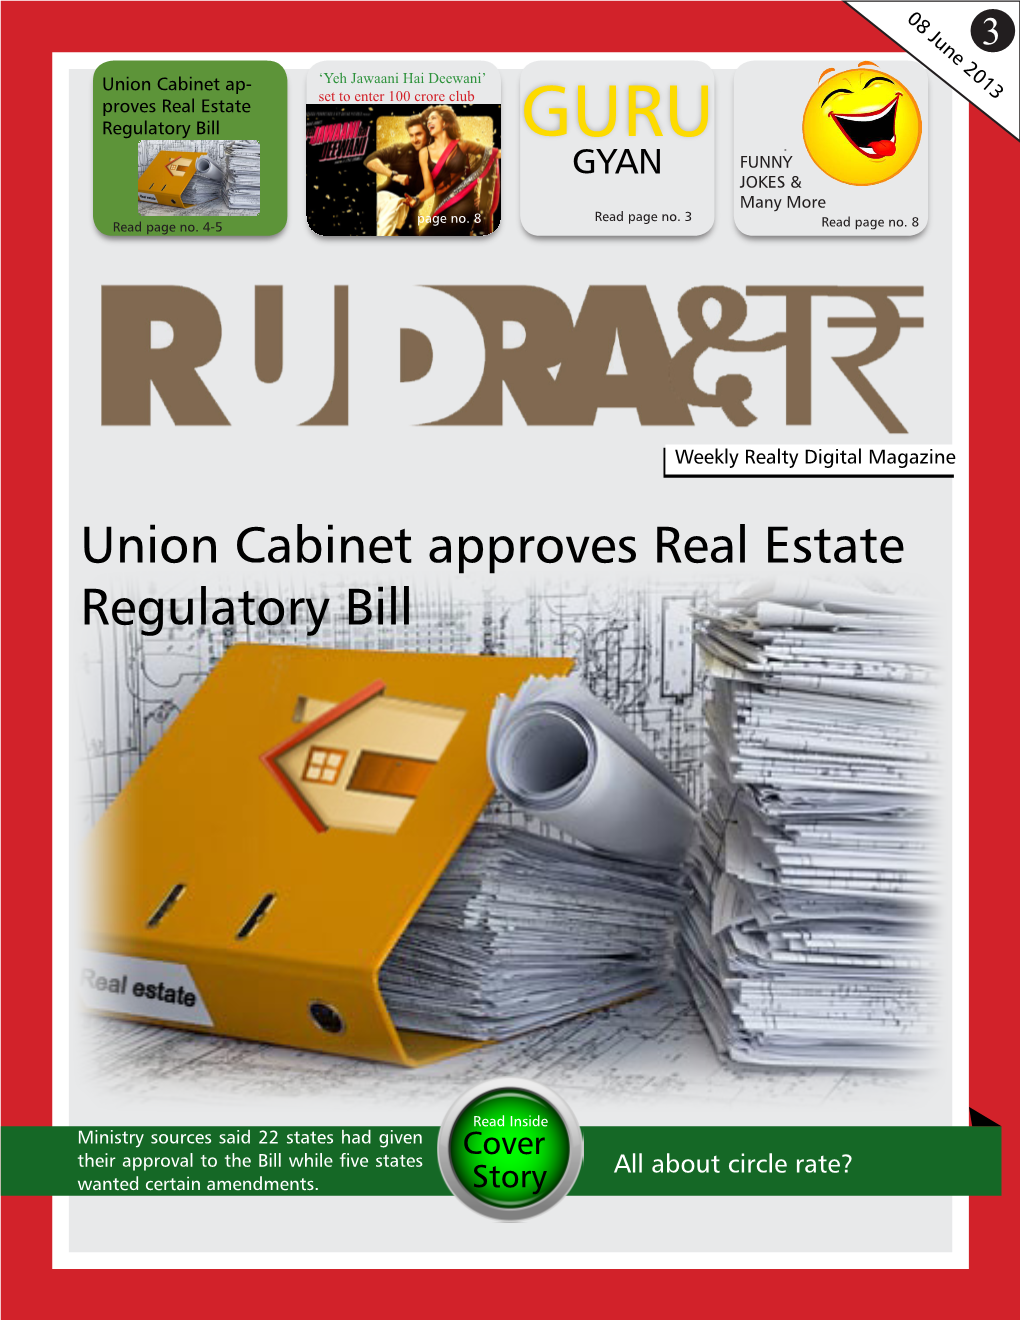 Union Cabinet Approves Real Estate Regulatory Bill